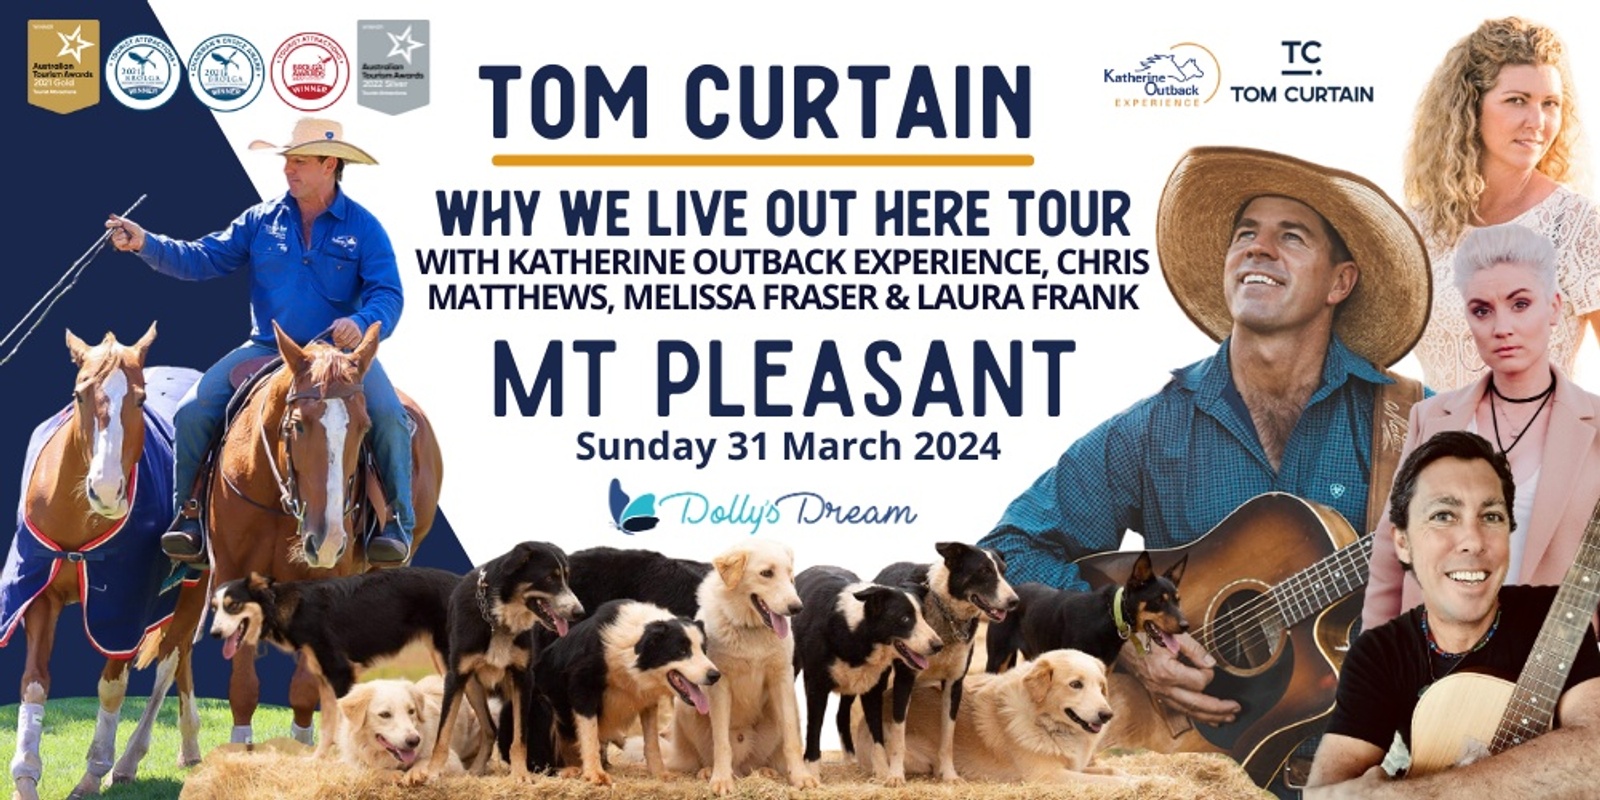 Banner image for Tom Curtain Tour - MT PLEASANT, SA